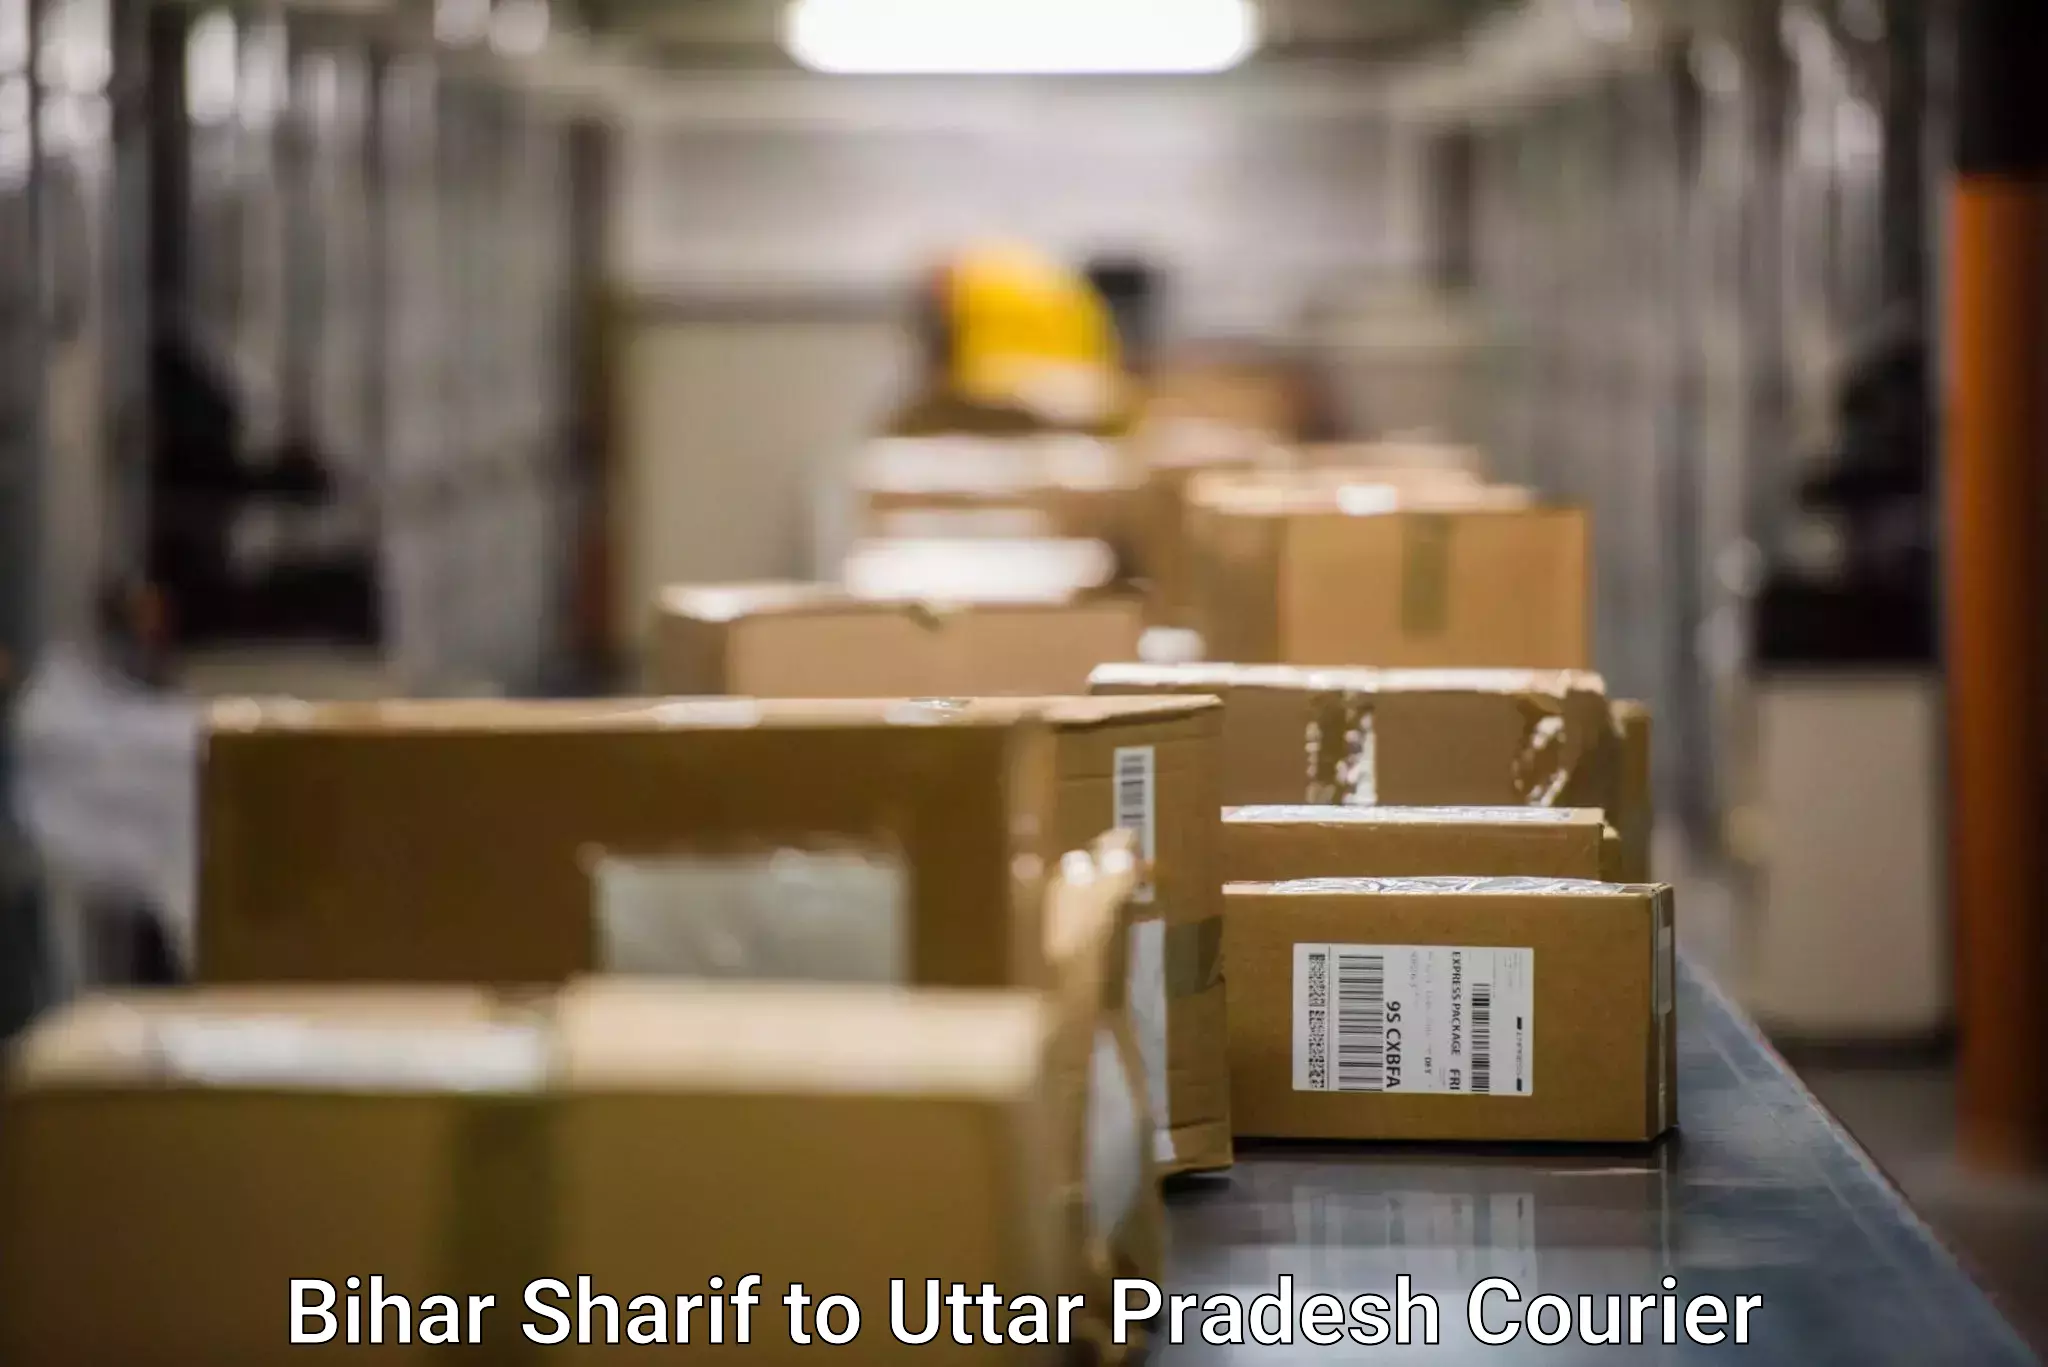 Express logistics service Bihar Sharif to Mau